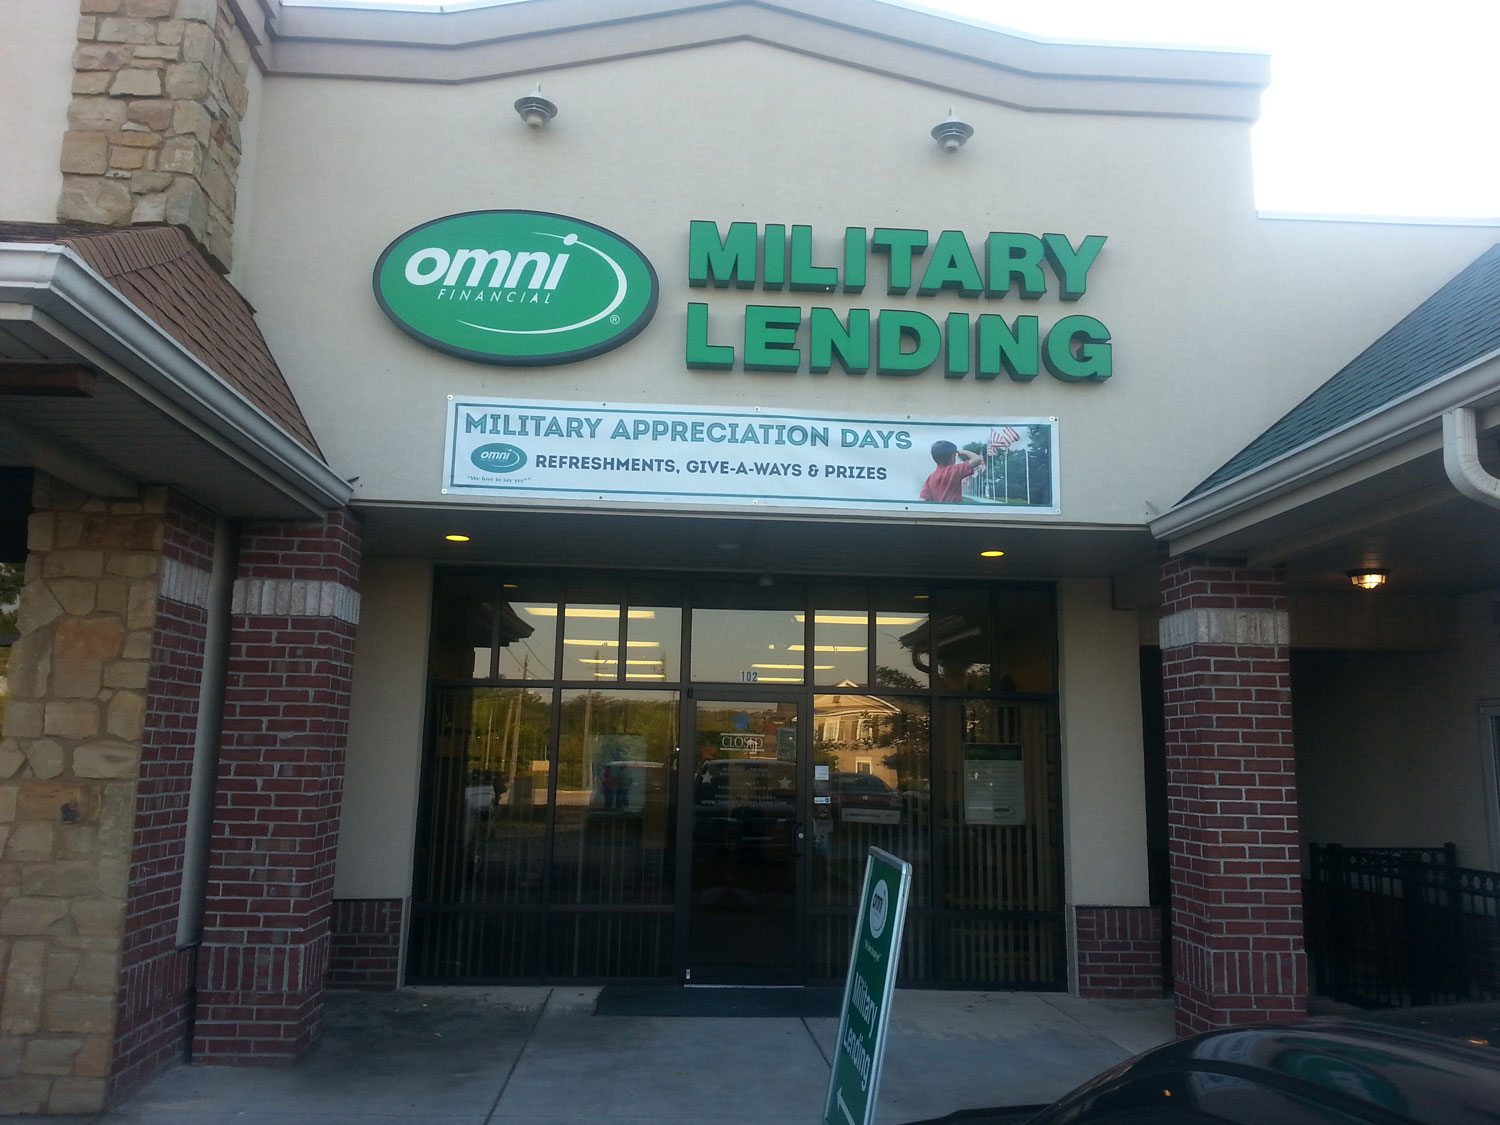 It’s Military Appreciation Days at Omni!